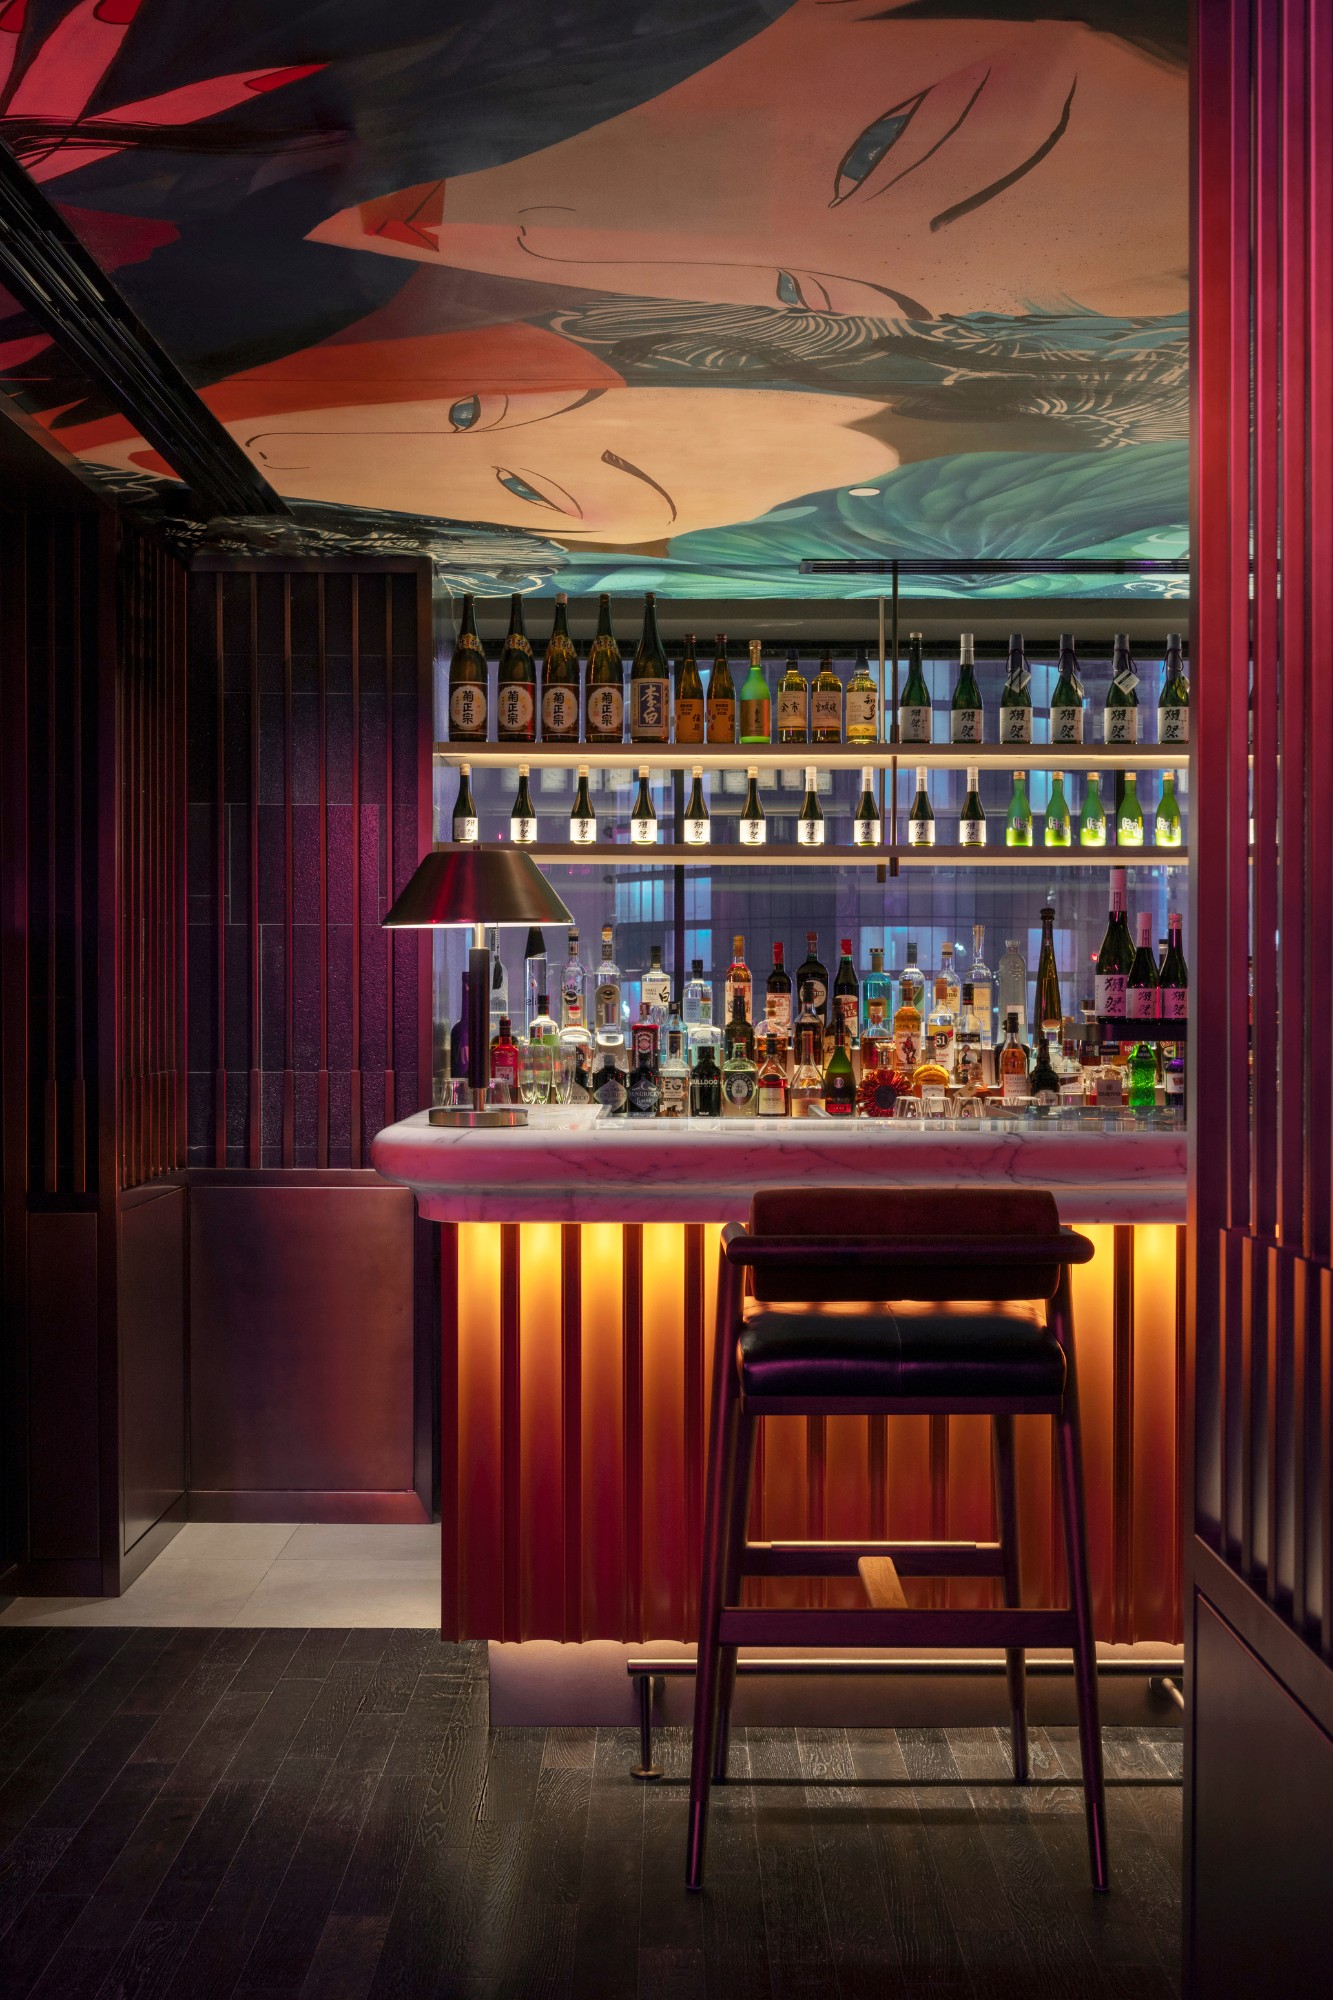 LW Design: Creating a Captivating, Japanese Inspired Bar Design | SBID